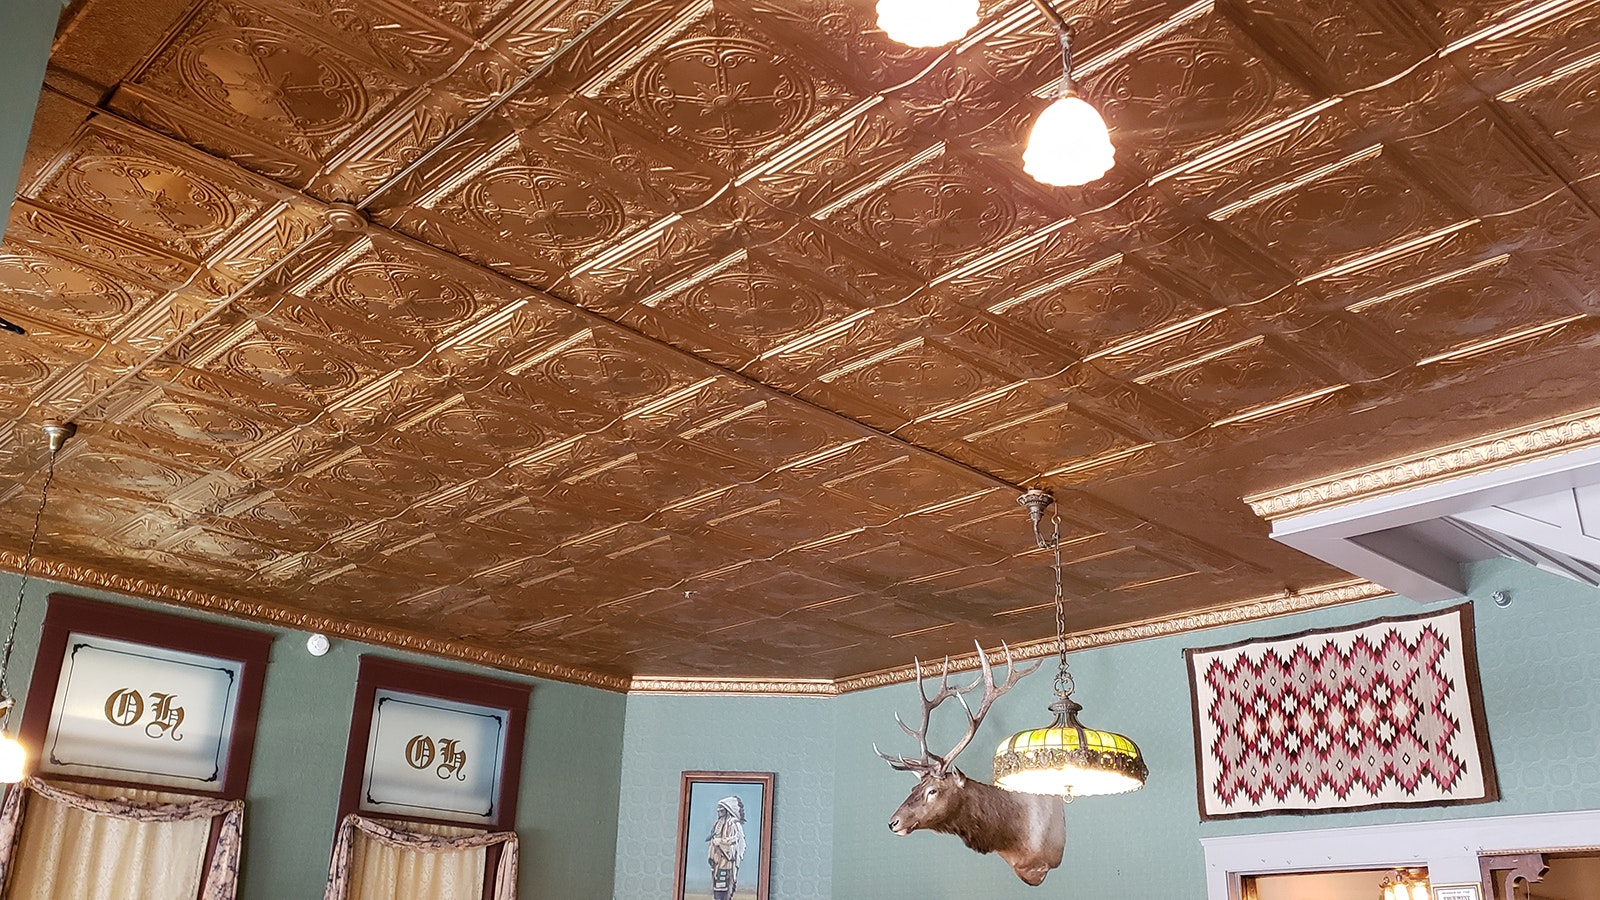 The original hand-struck tin ceilings were hiding behind a fake ceiling.